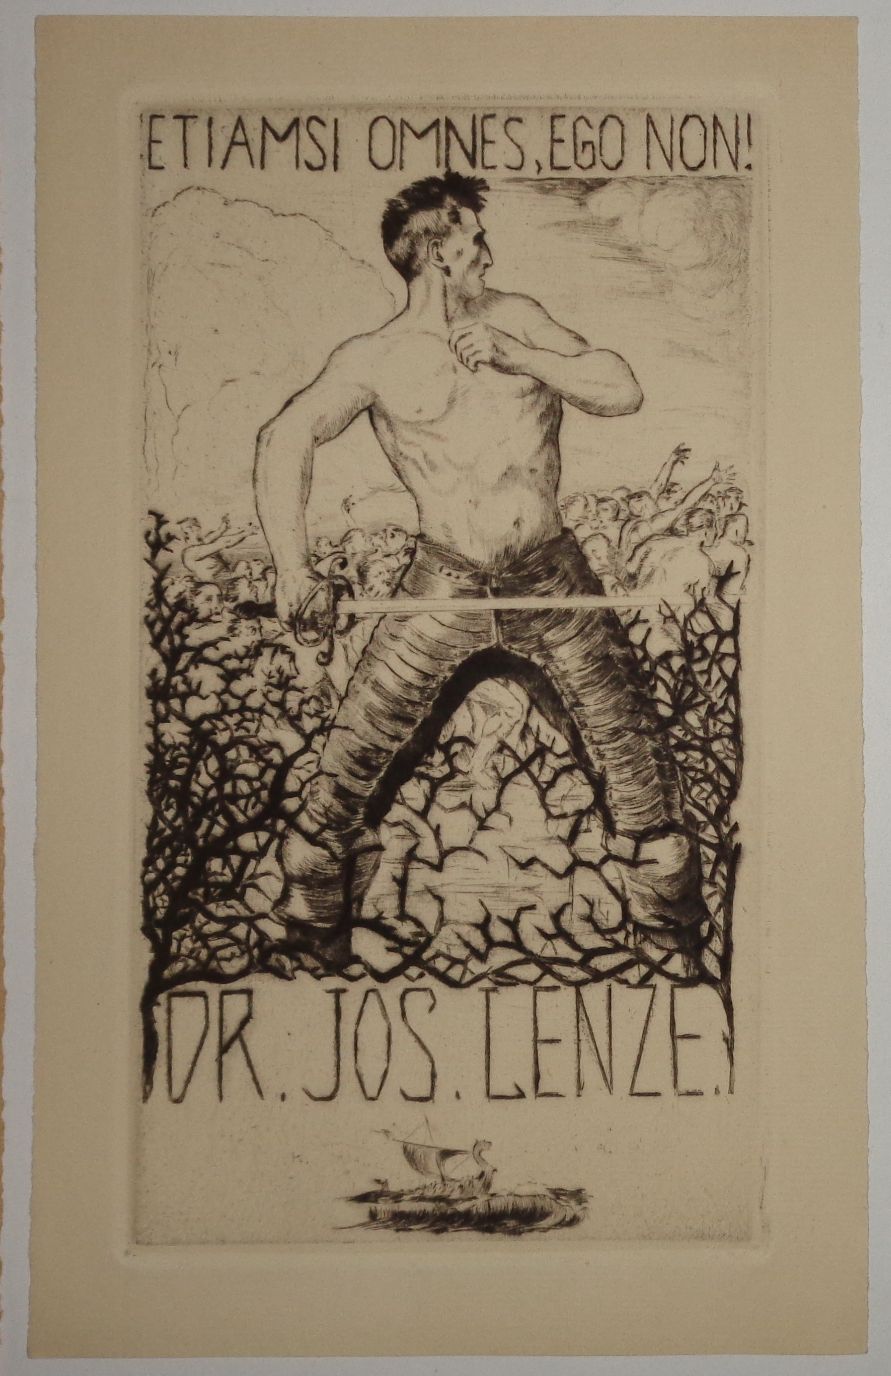 Ritter, Karl: Dr.  Jos. LENZE.